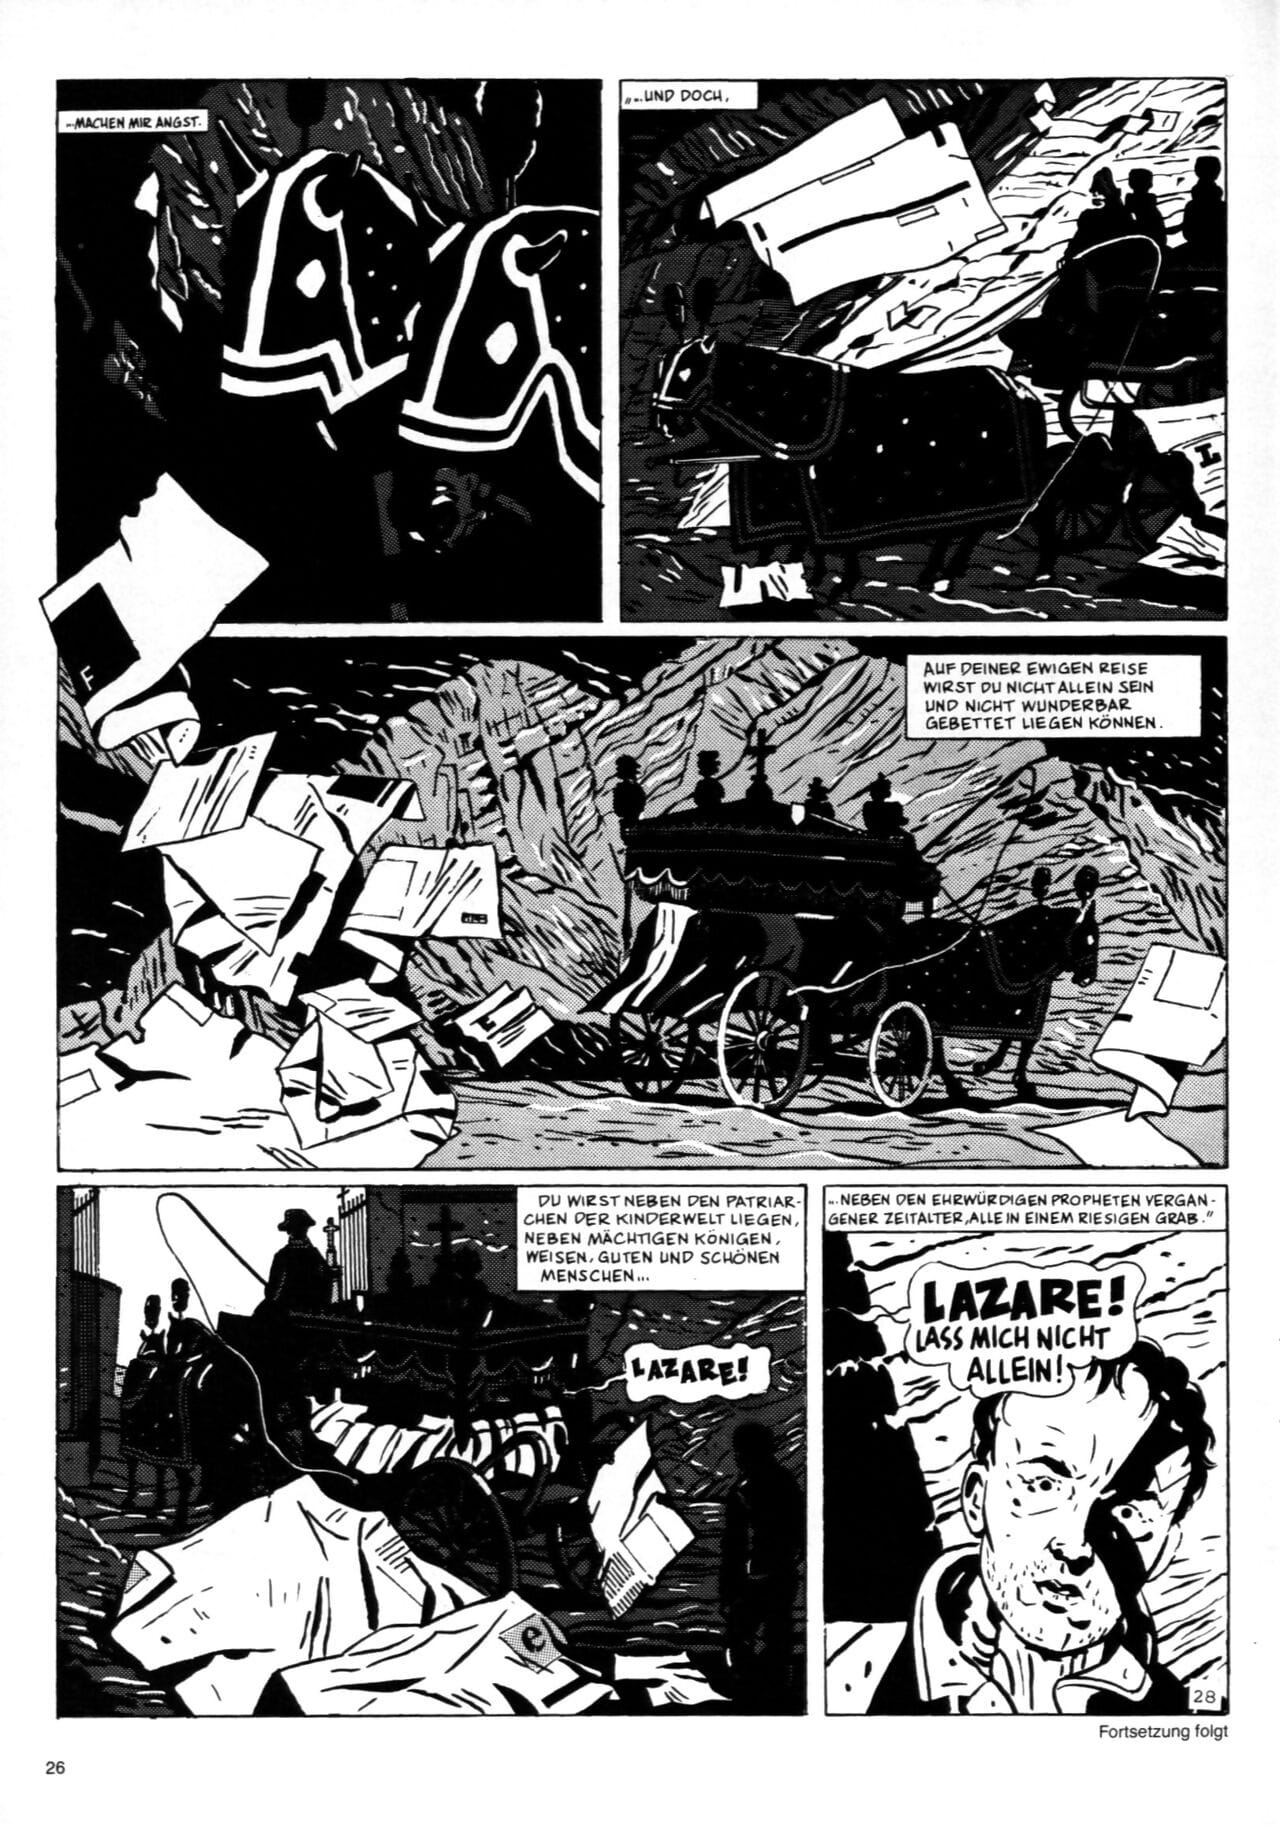 schwermetall #095 部分 2 page 1